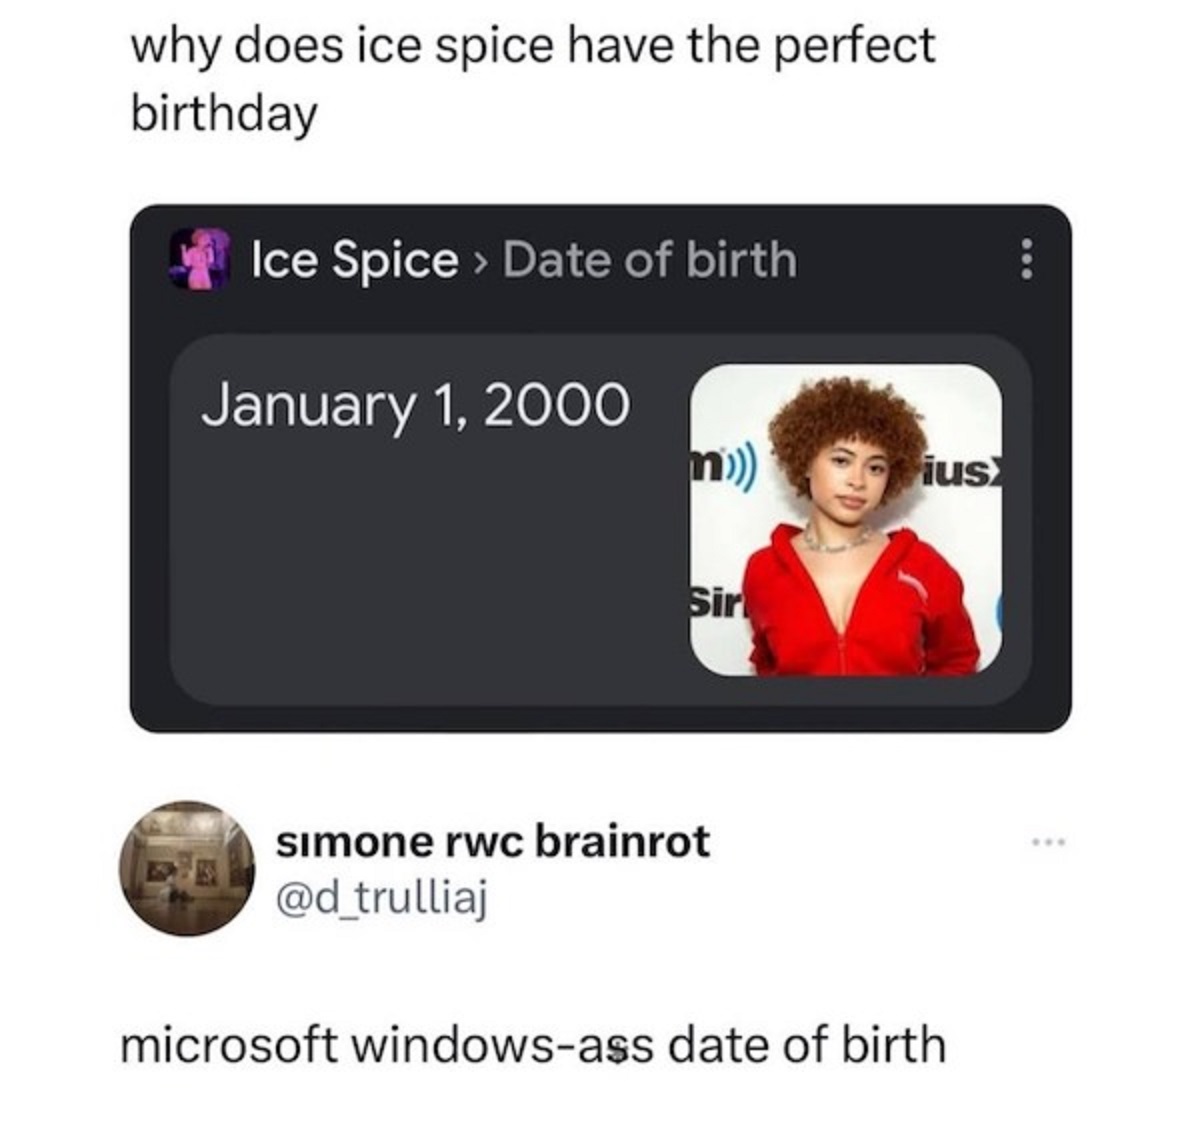 ice spice birthday meme - why does ice spice have the perfect birthday Ice Spice > Date of birth m ius Sir simone rwc brainrot microsoft windowsass date of birth